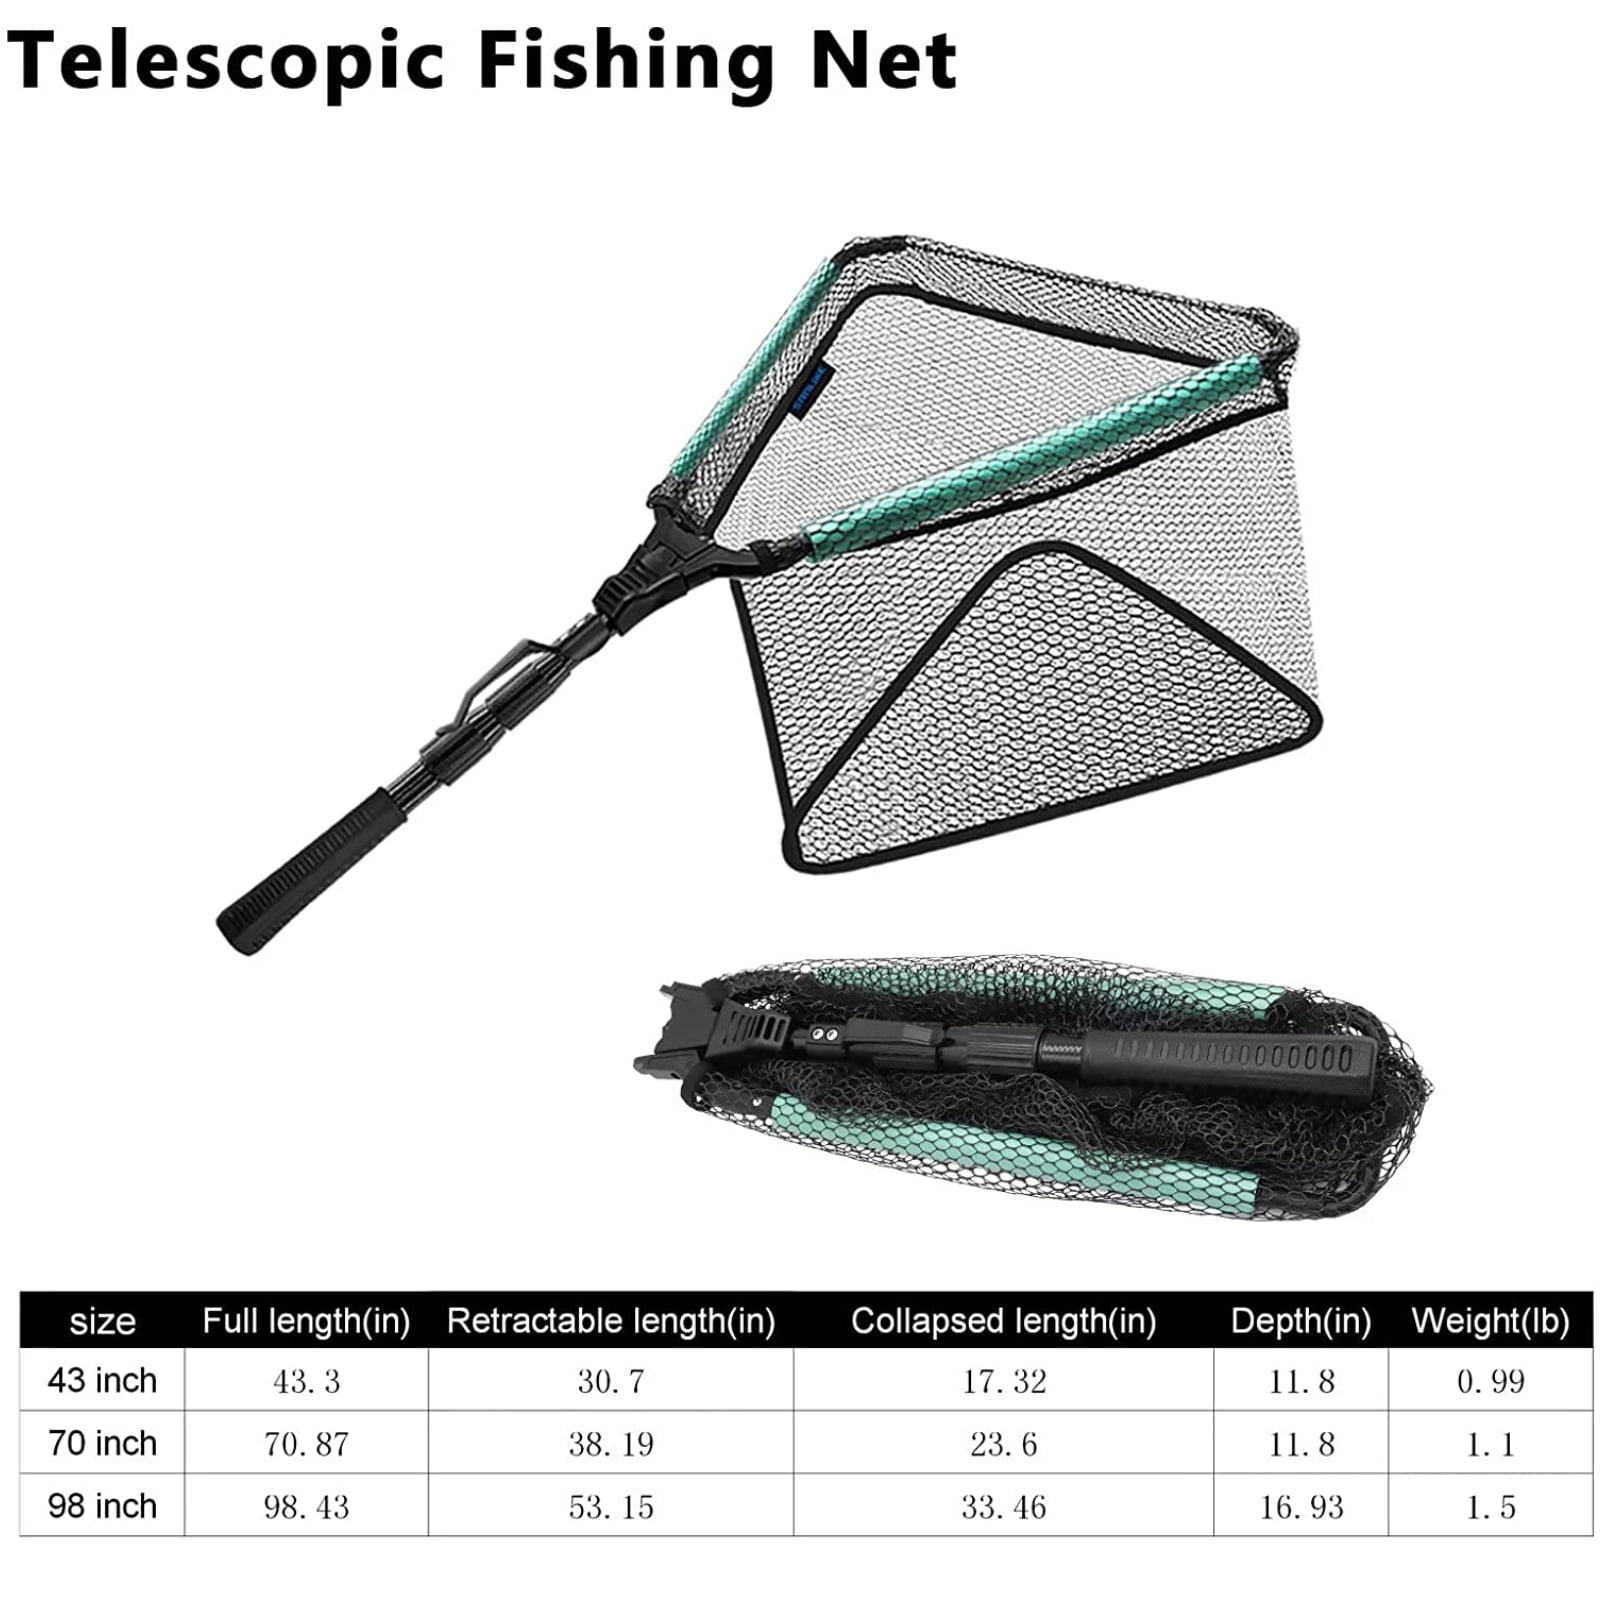 Yeahmart Floating Fishing Net Rubber Coated Landing Net Pole Easy Catch  Release Foldable Telescopic Sea Fishing Goods Accessorie 240102 From Hui09,  $19.14